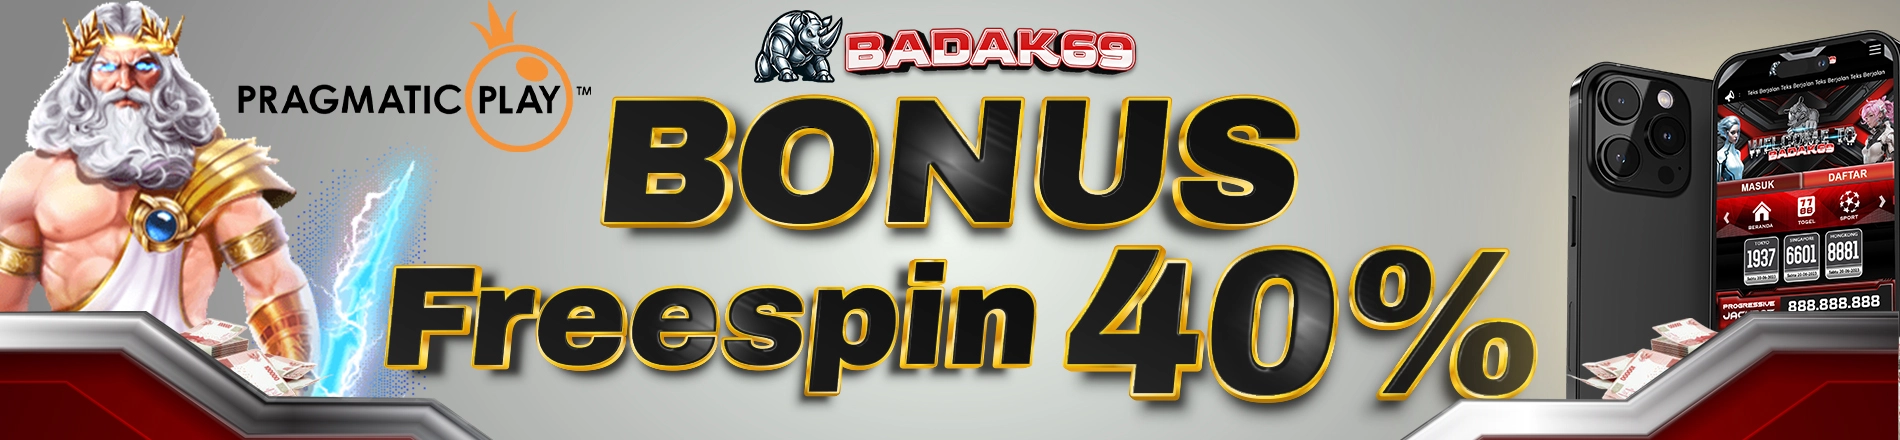 Promo Bonus Freespin Slot Pragmatic Play 40% - BADAK69